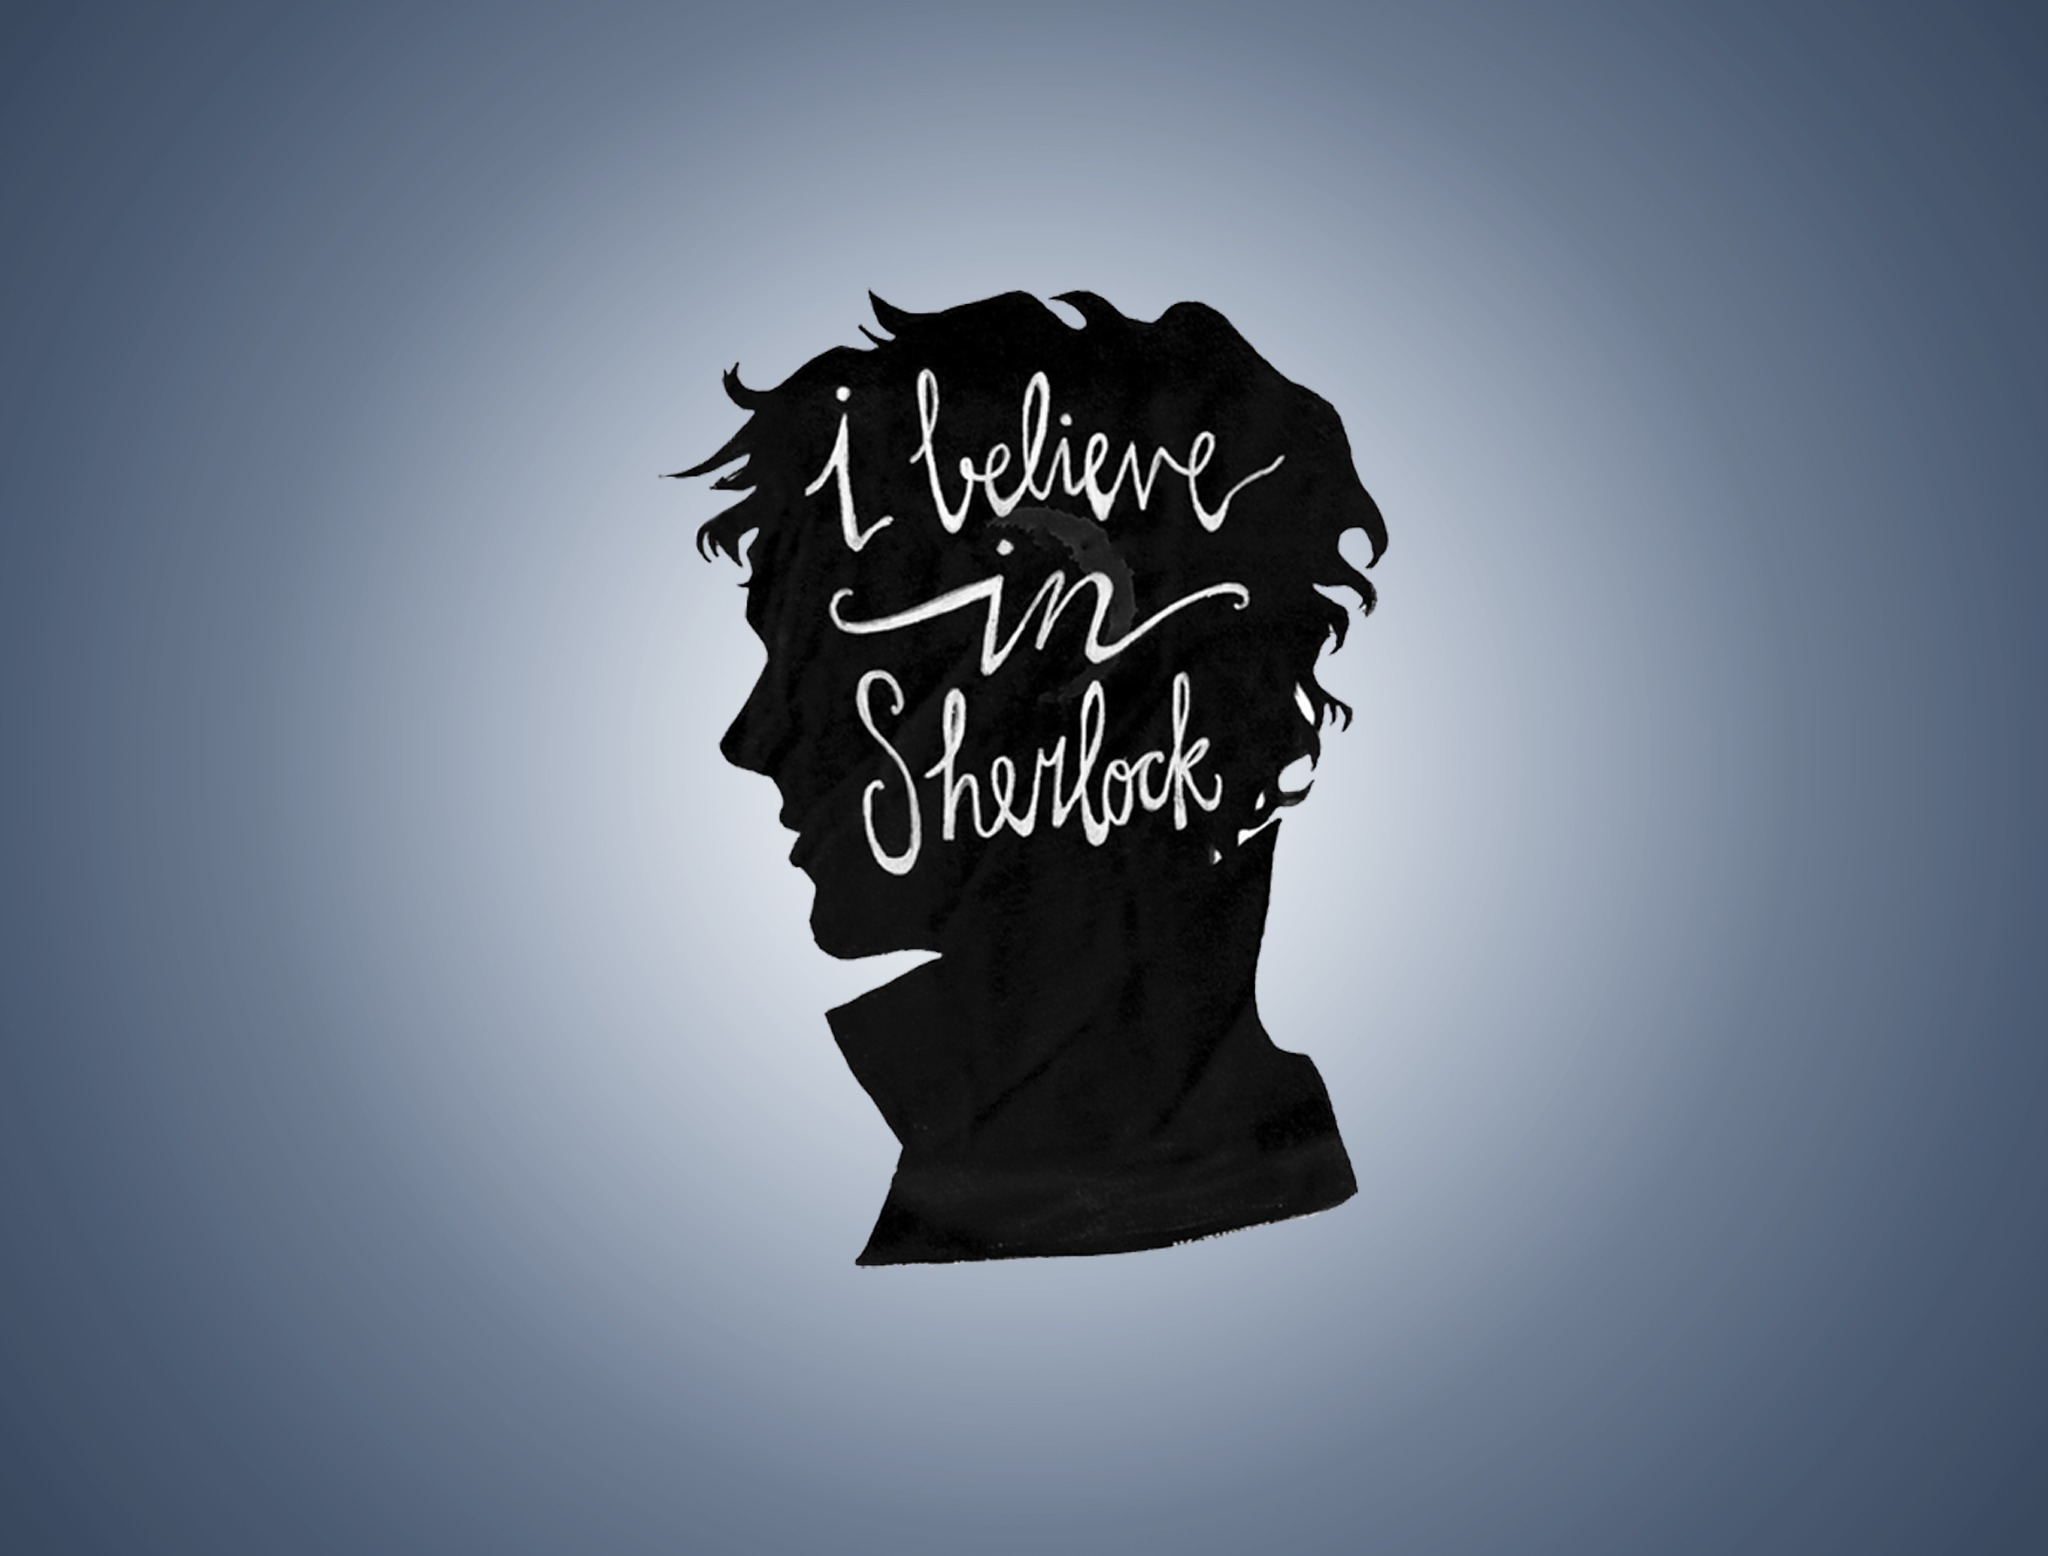 Wallpaper Sherlock, Sherlock Holmes, Sherlock BBC, Benedict Cumberbatch,  Sherlock Holmes, Sherlock (TV series) images for desktop, section  минимализм - download